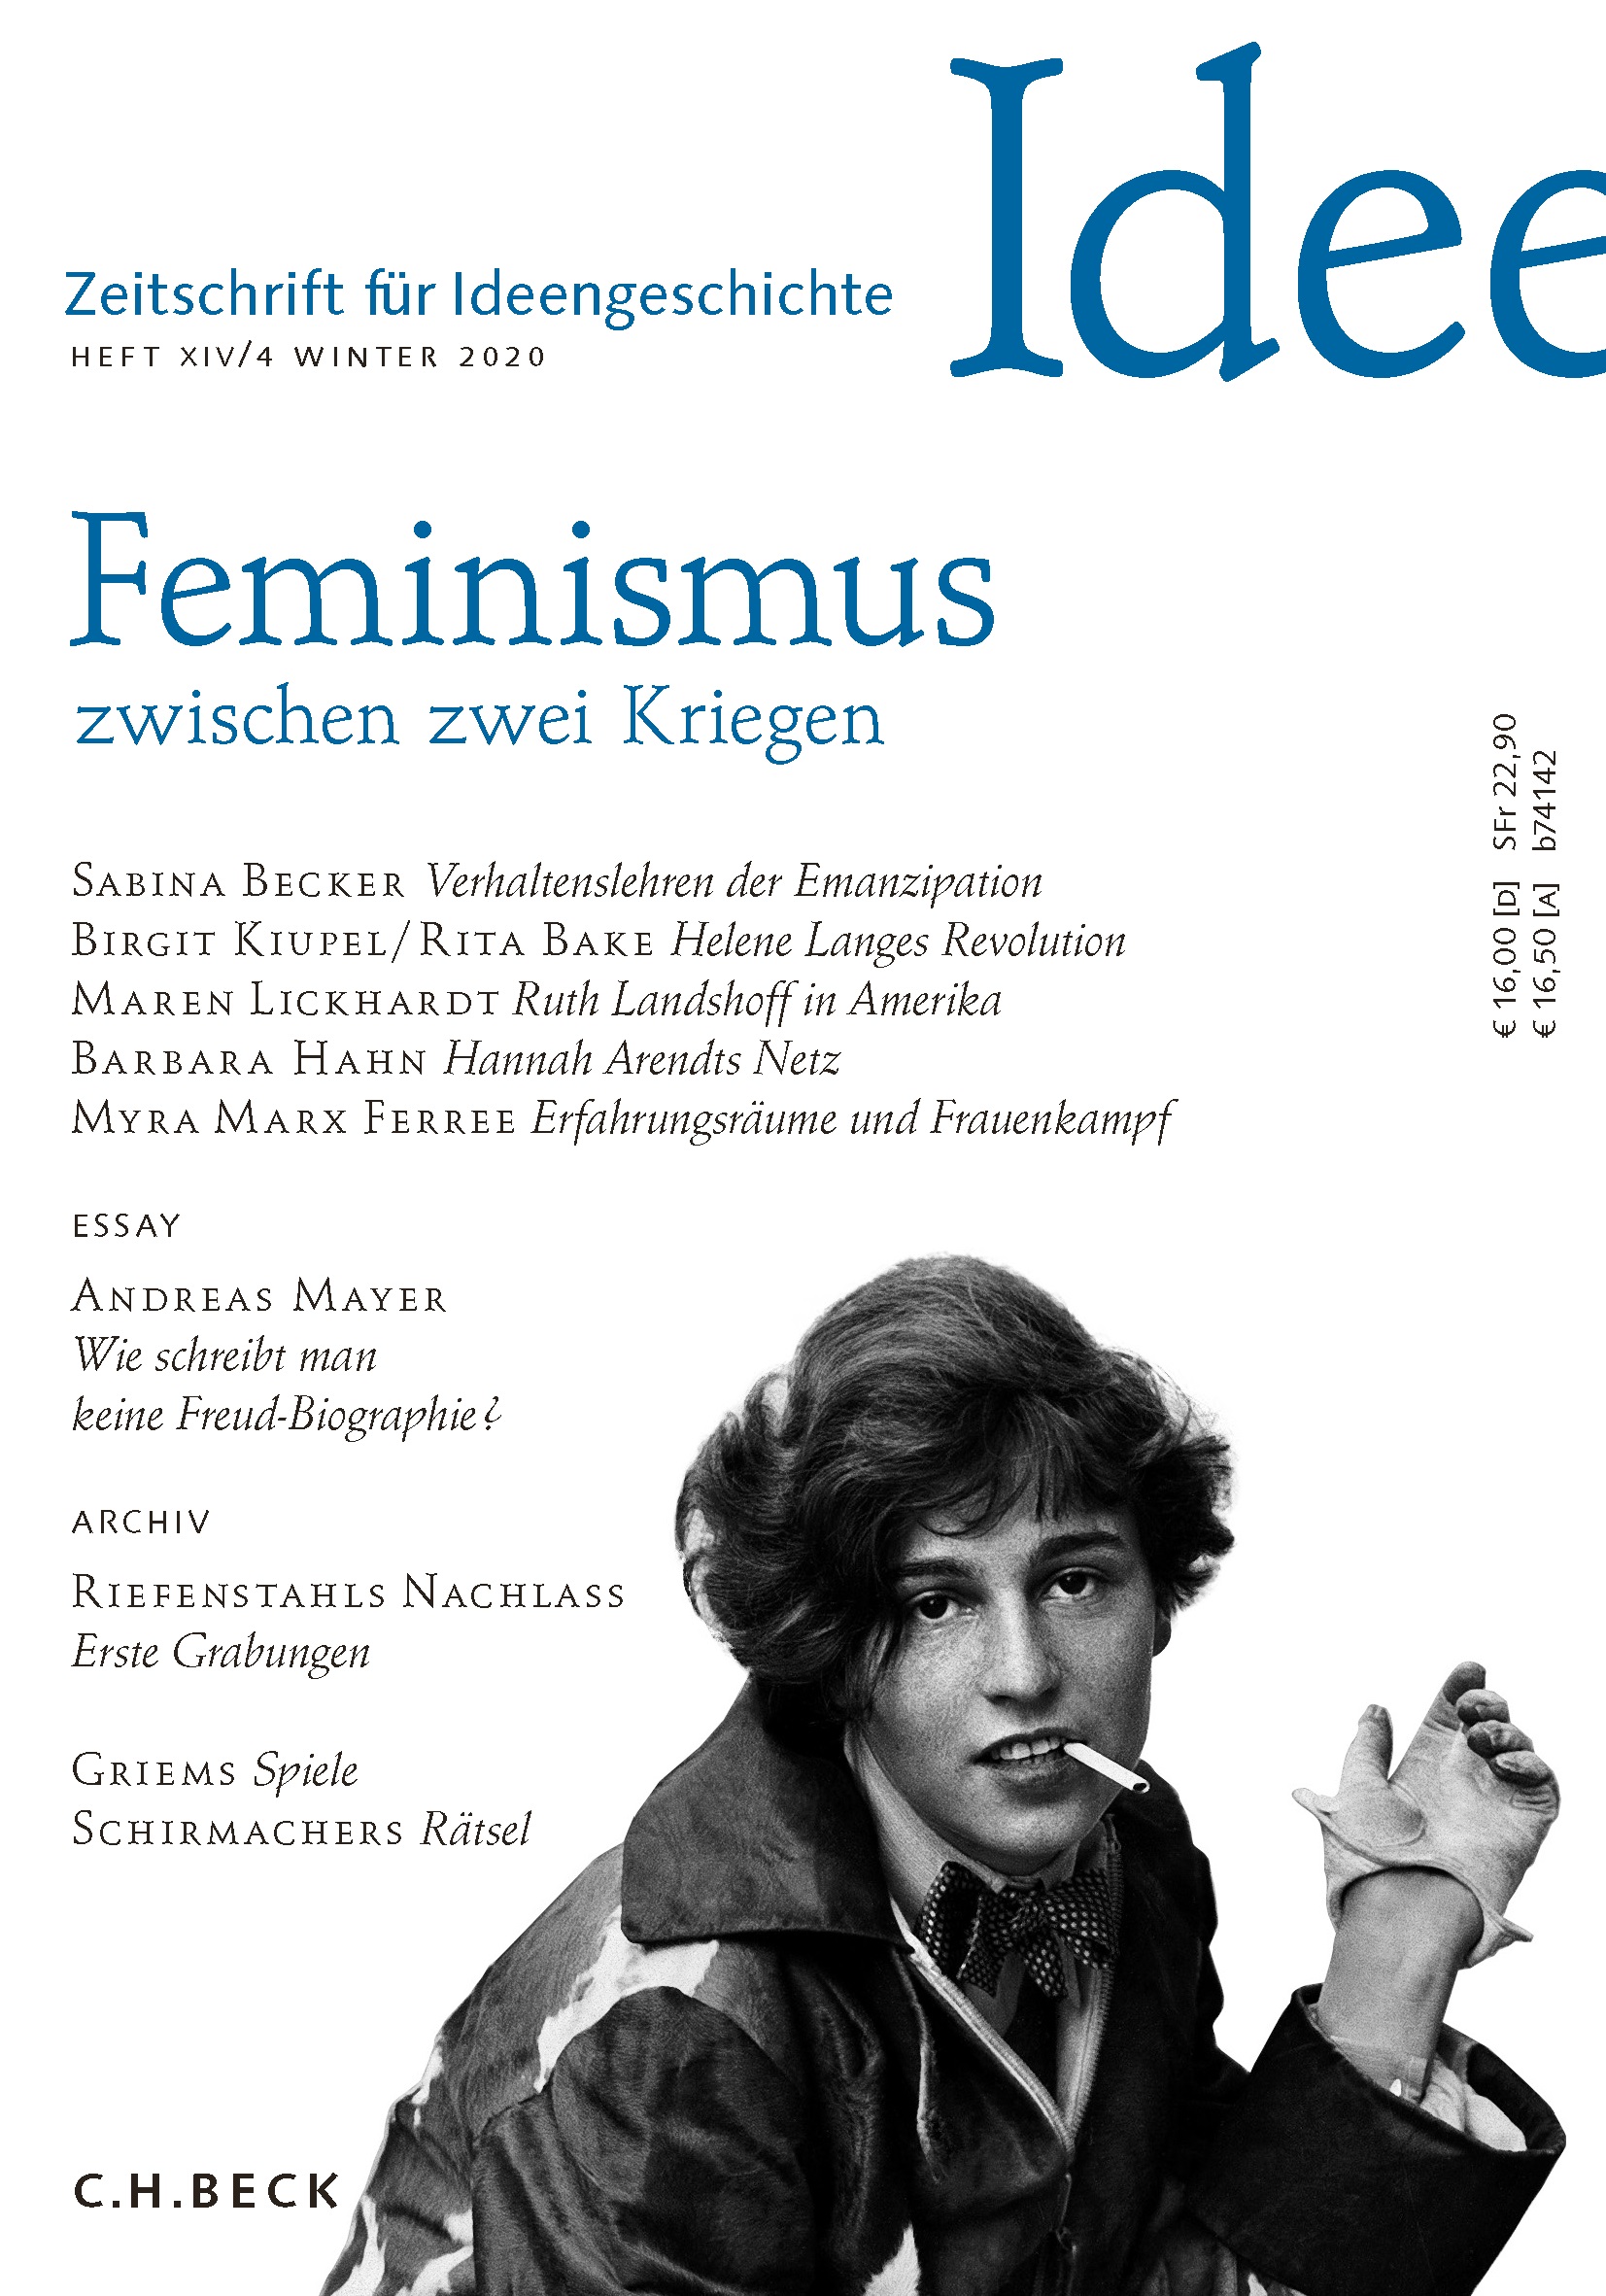 cover of Heft XIV/4 Winter 2020